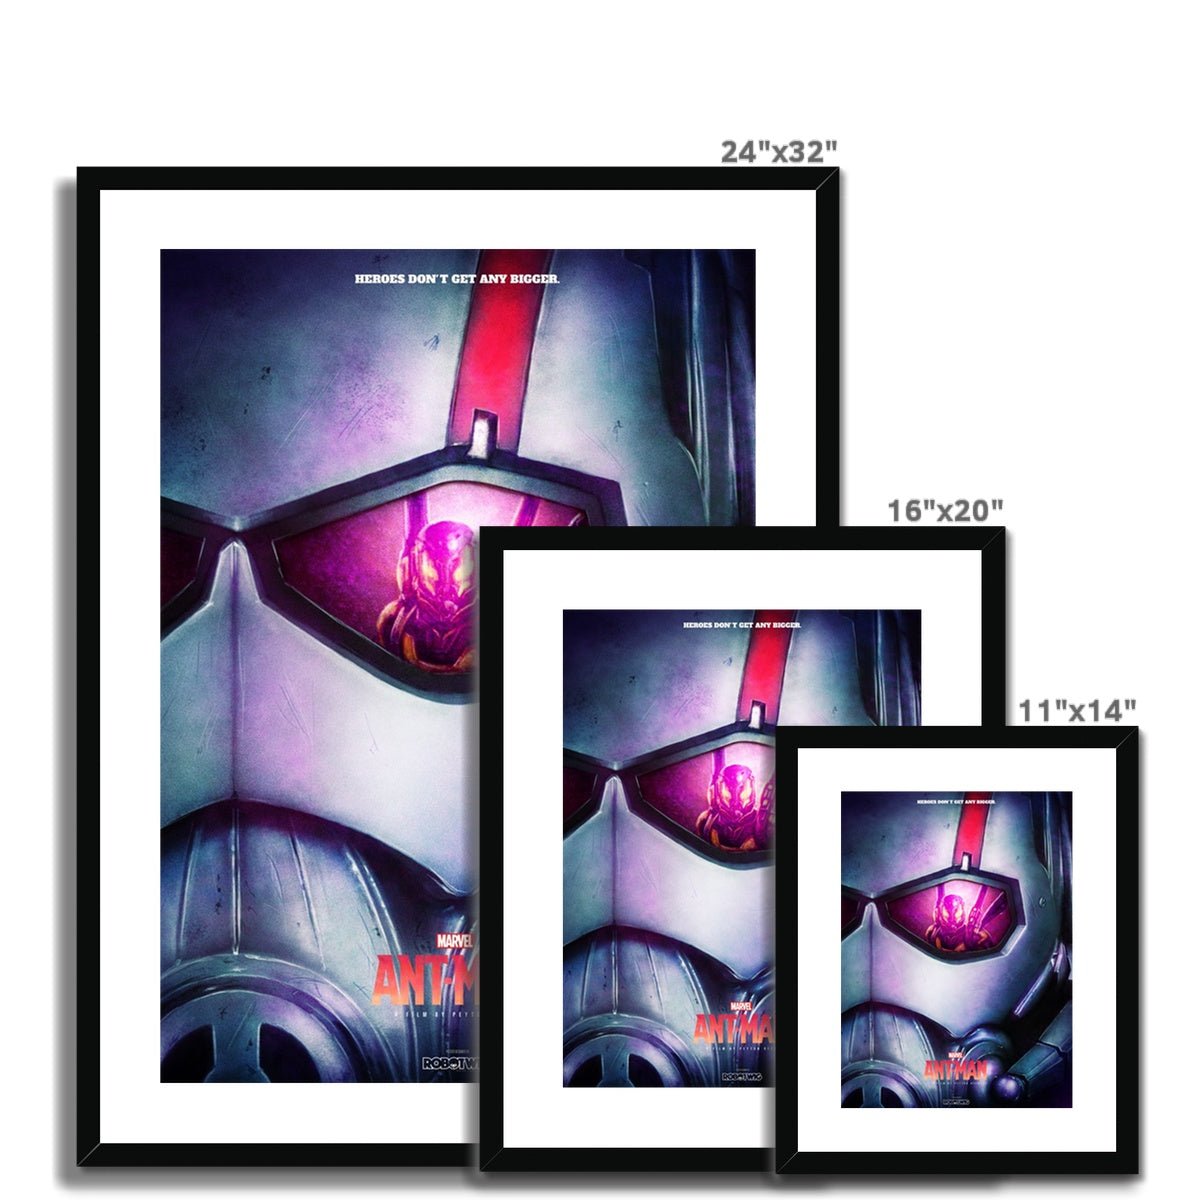 Antman Alternate Movie Poster Art Framed & Mounted Print